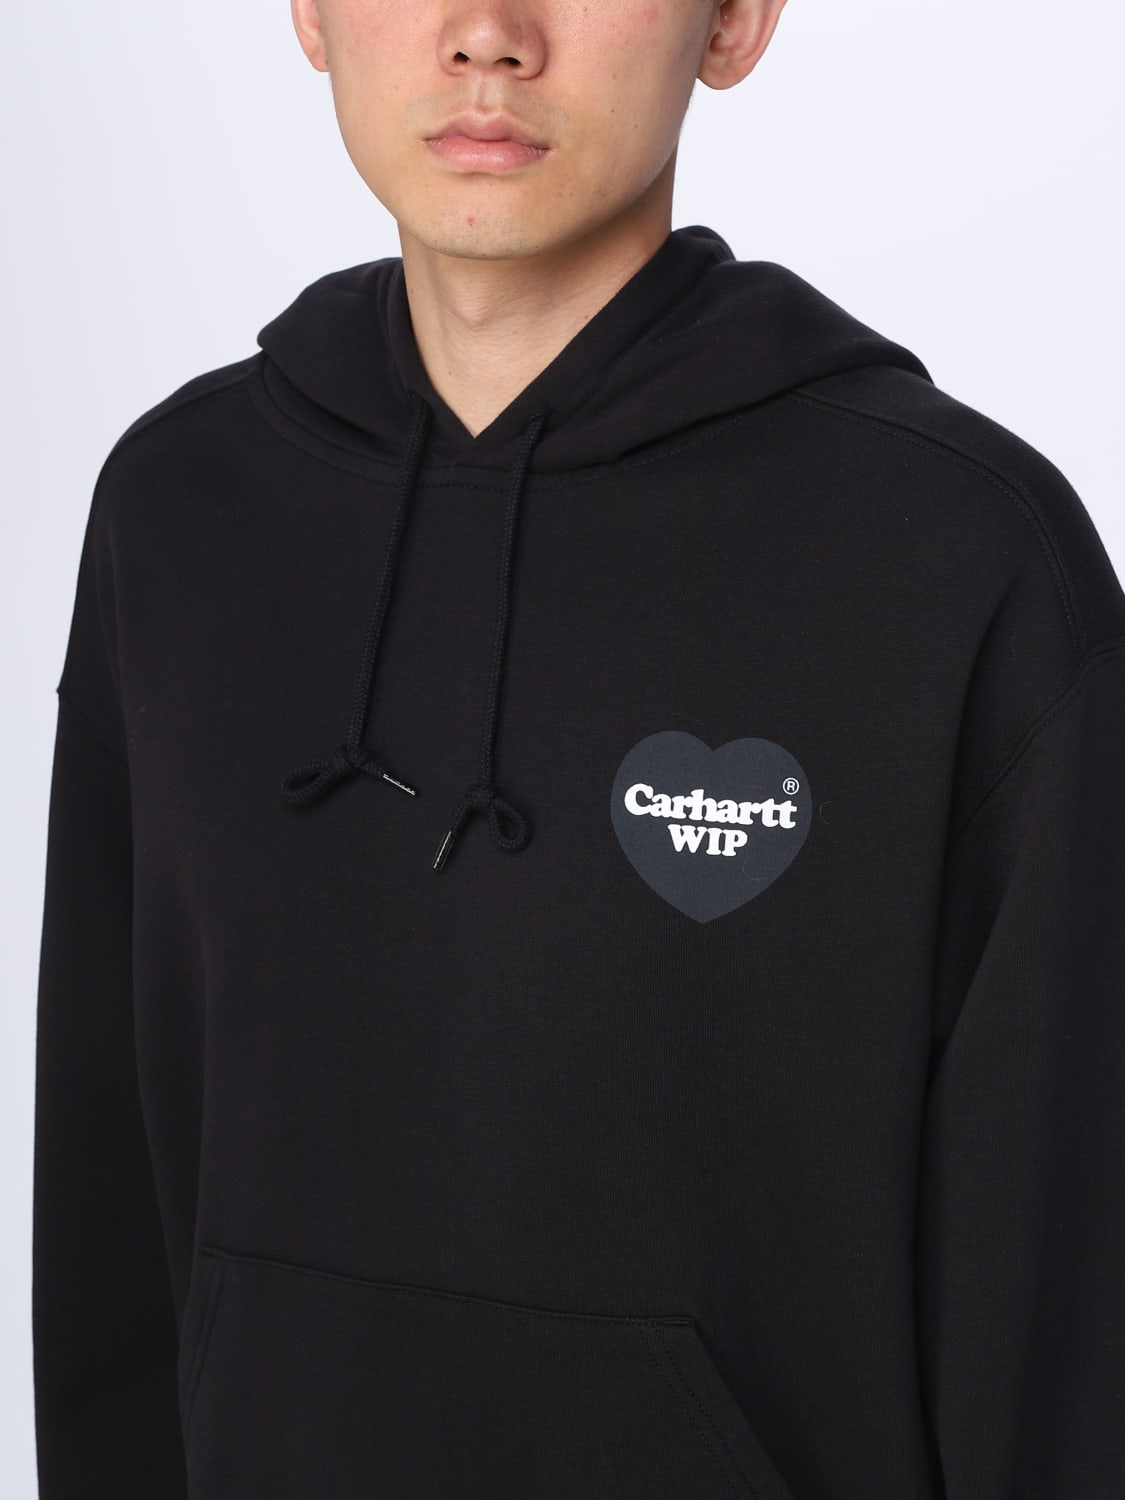 CARHARTT WIP: sweatshirt for man - Black | Carhartt Wip sweatshirt ...